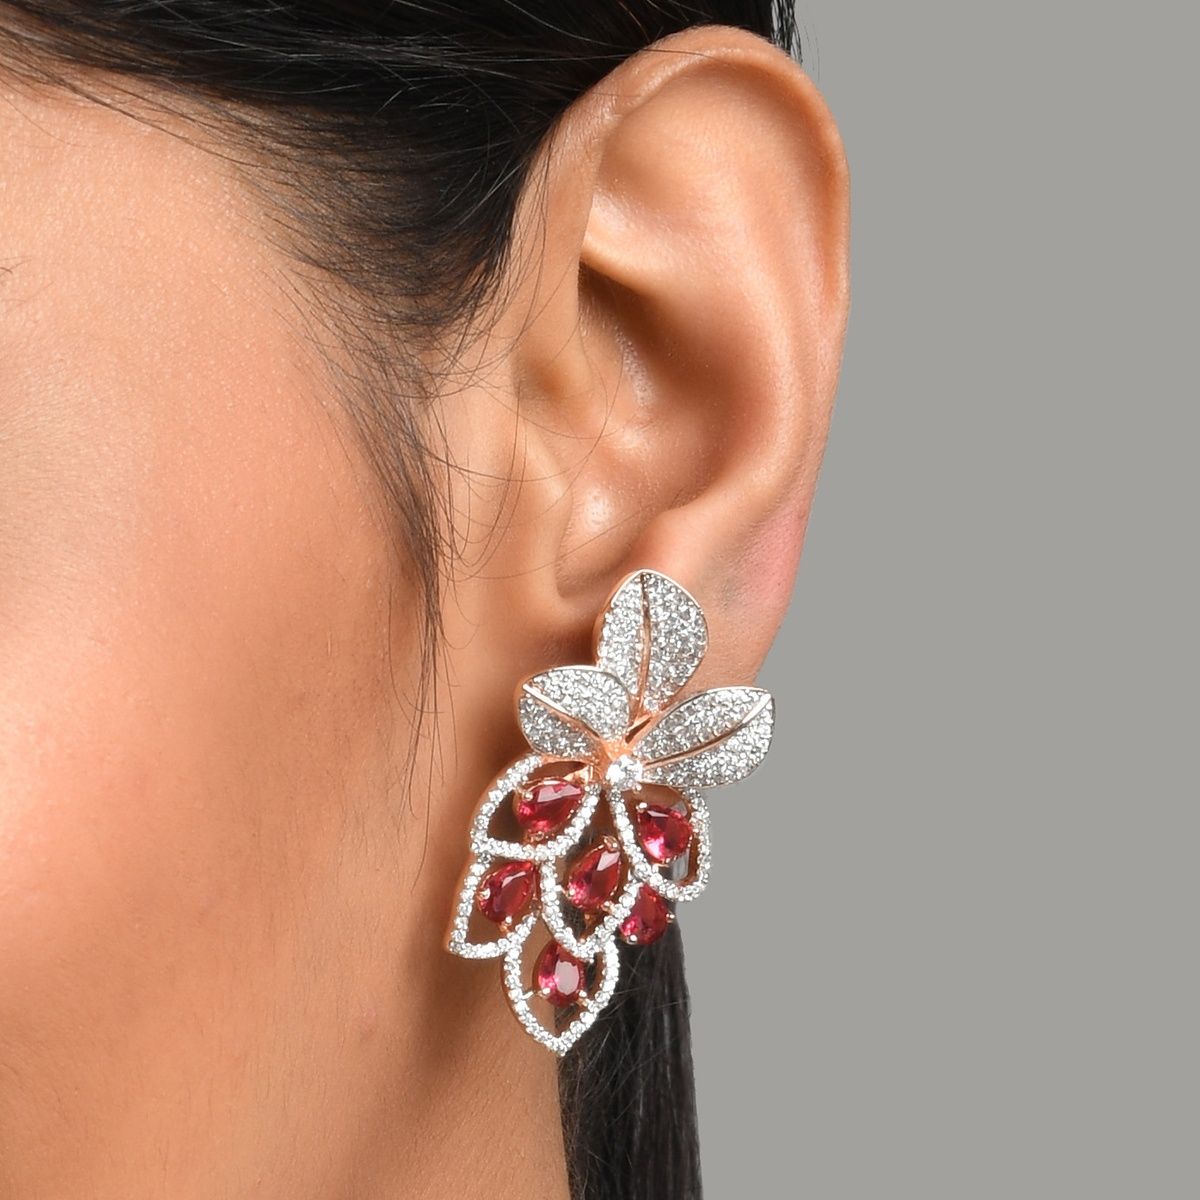 Buy quality FlowerShaped Diamond Earrings in 14k Rose Gold in Pune